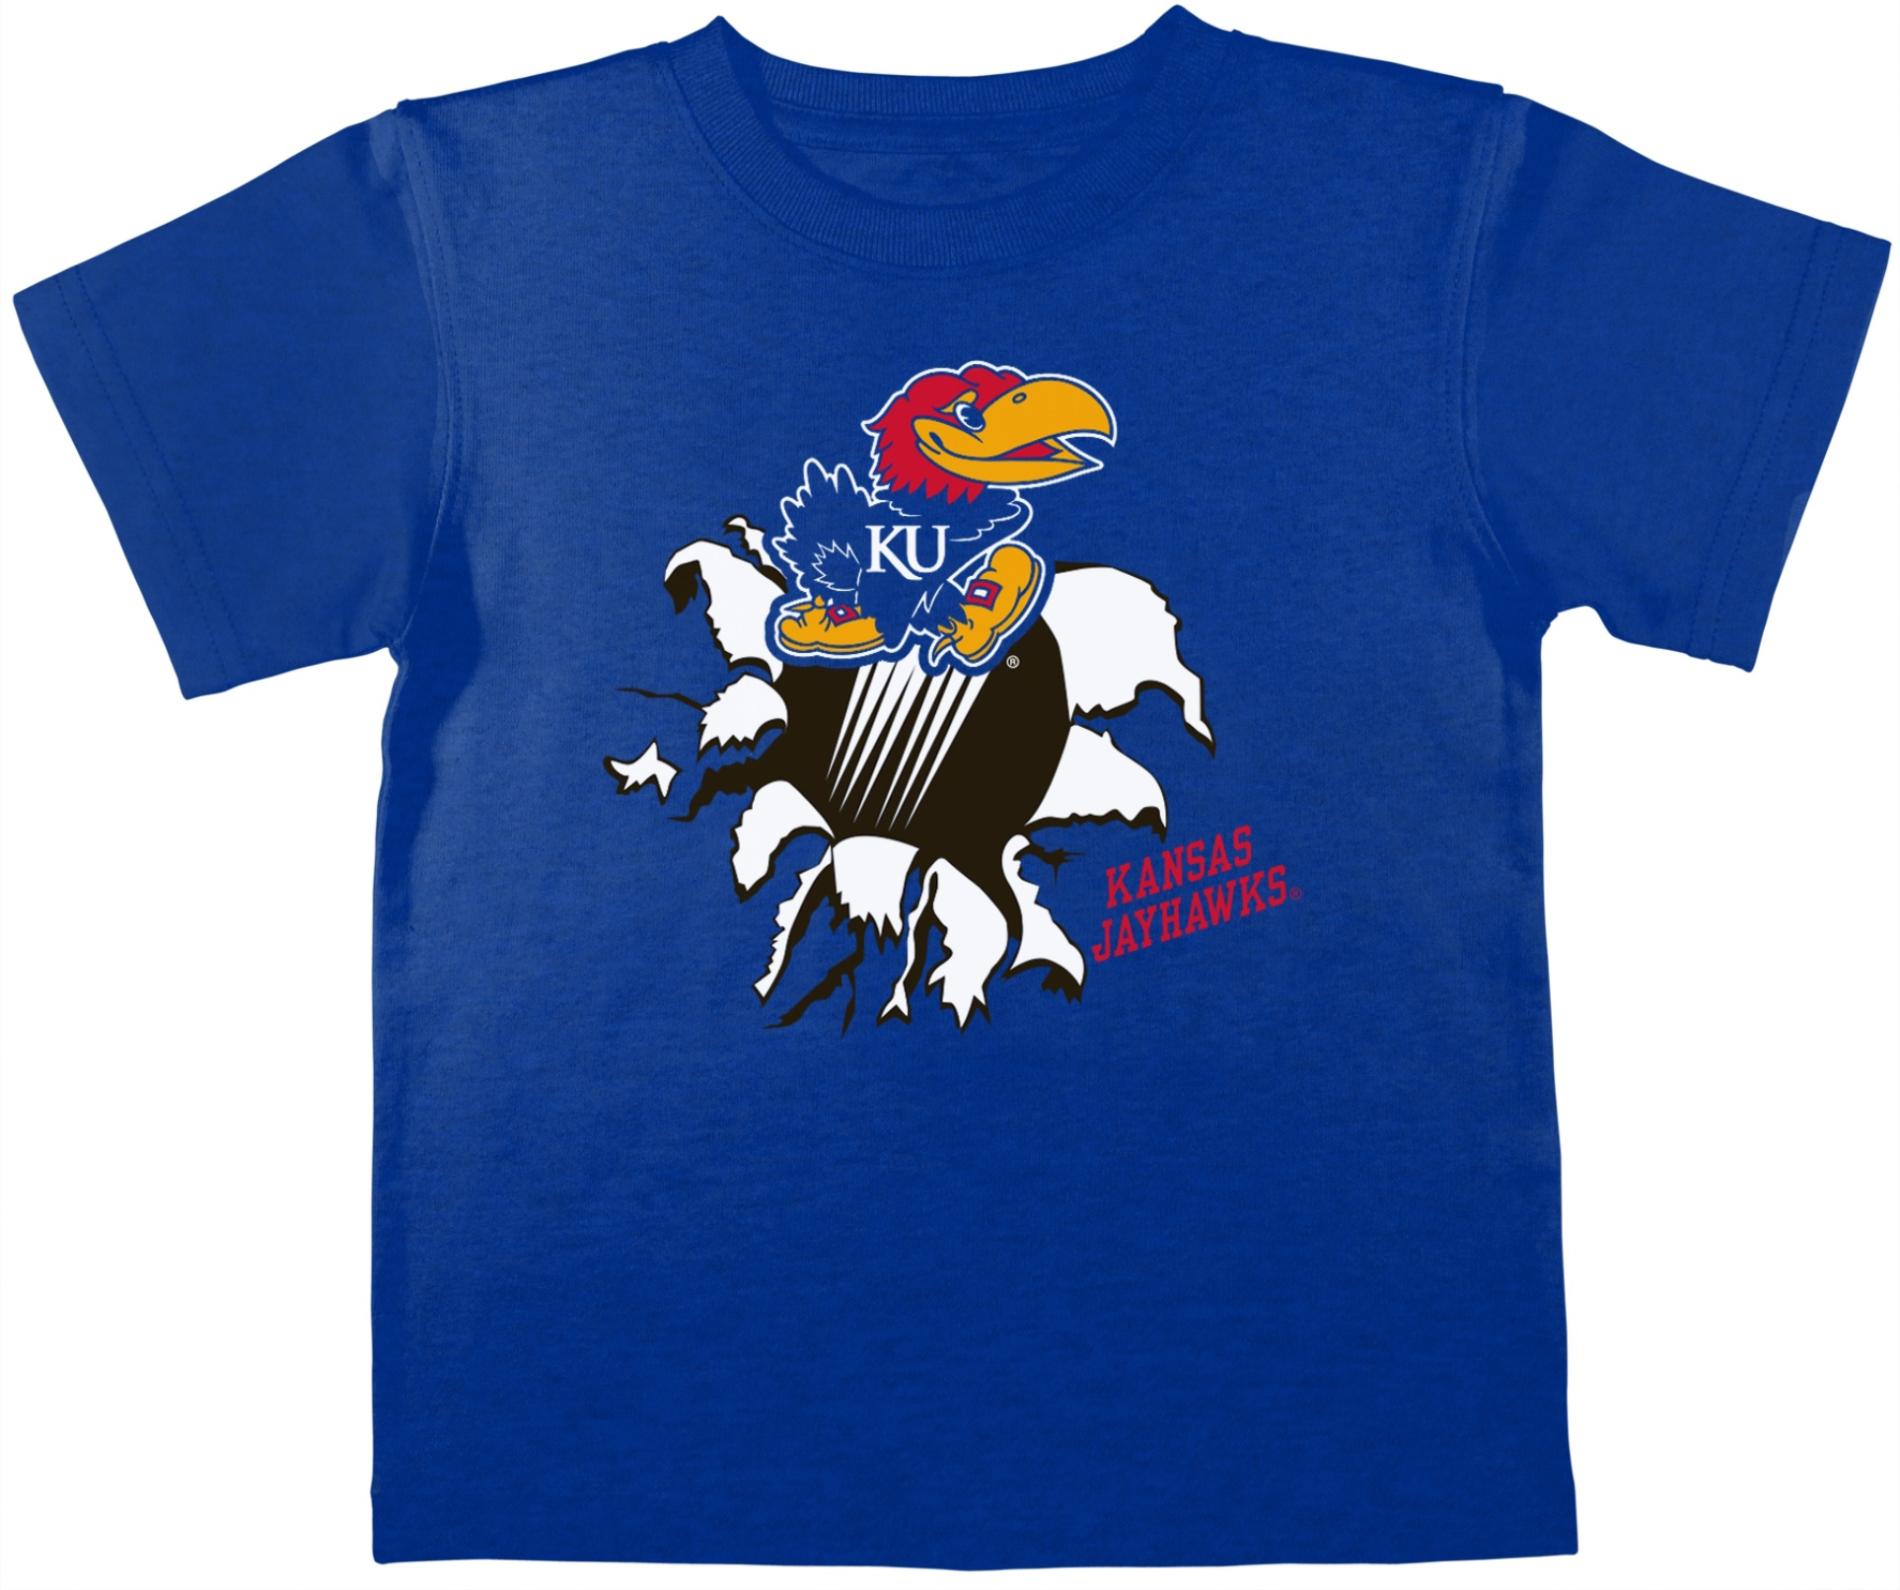 NCAA Toddler Boy's T-Shirt - University of Kansas Jayhawks